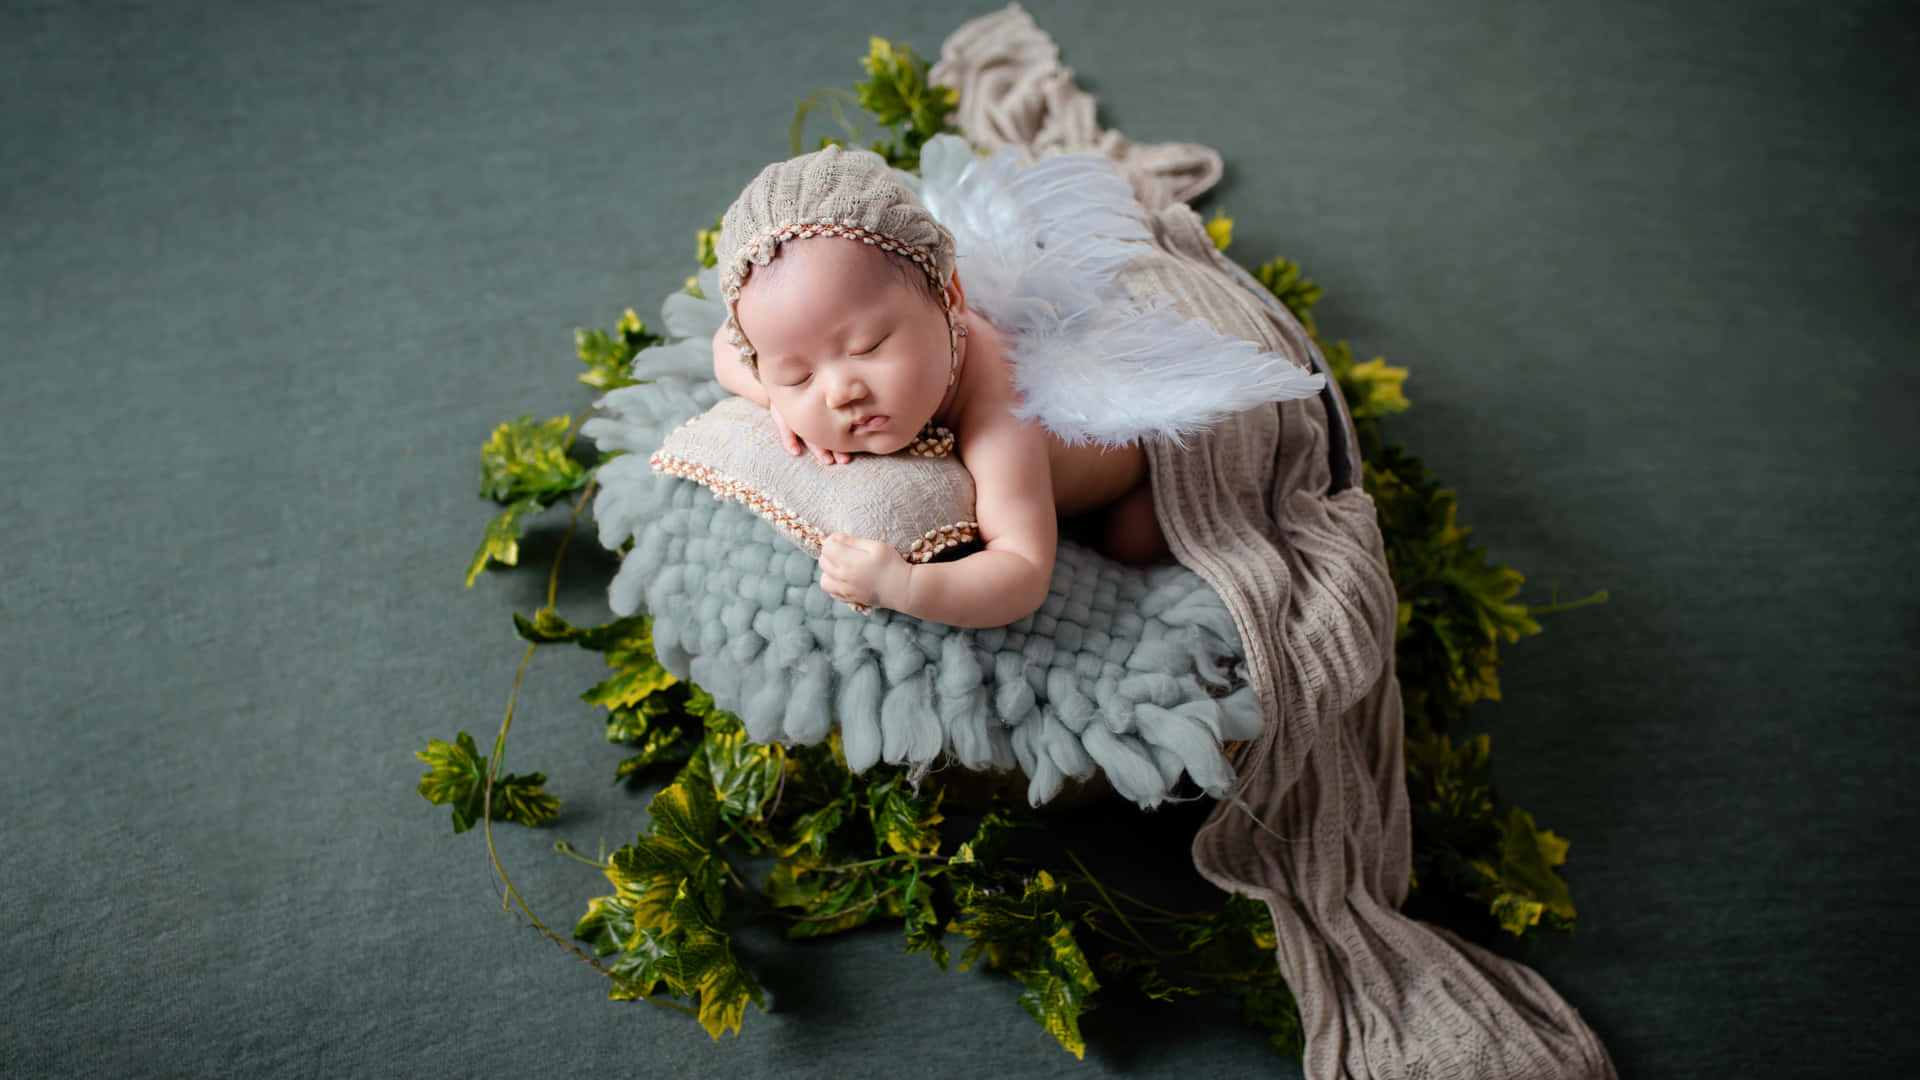 Sleeping Newborn Baby During A Photo Shoot Wallpaper